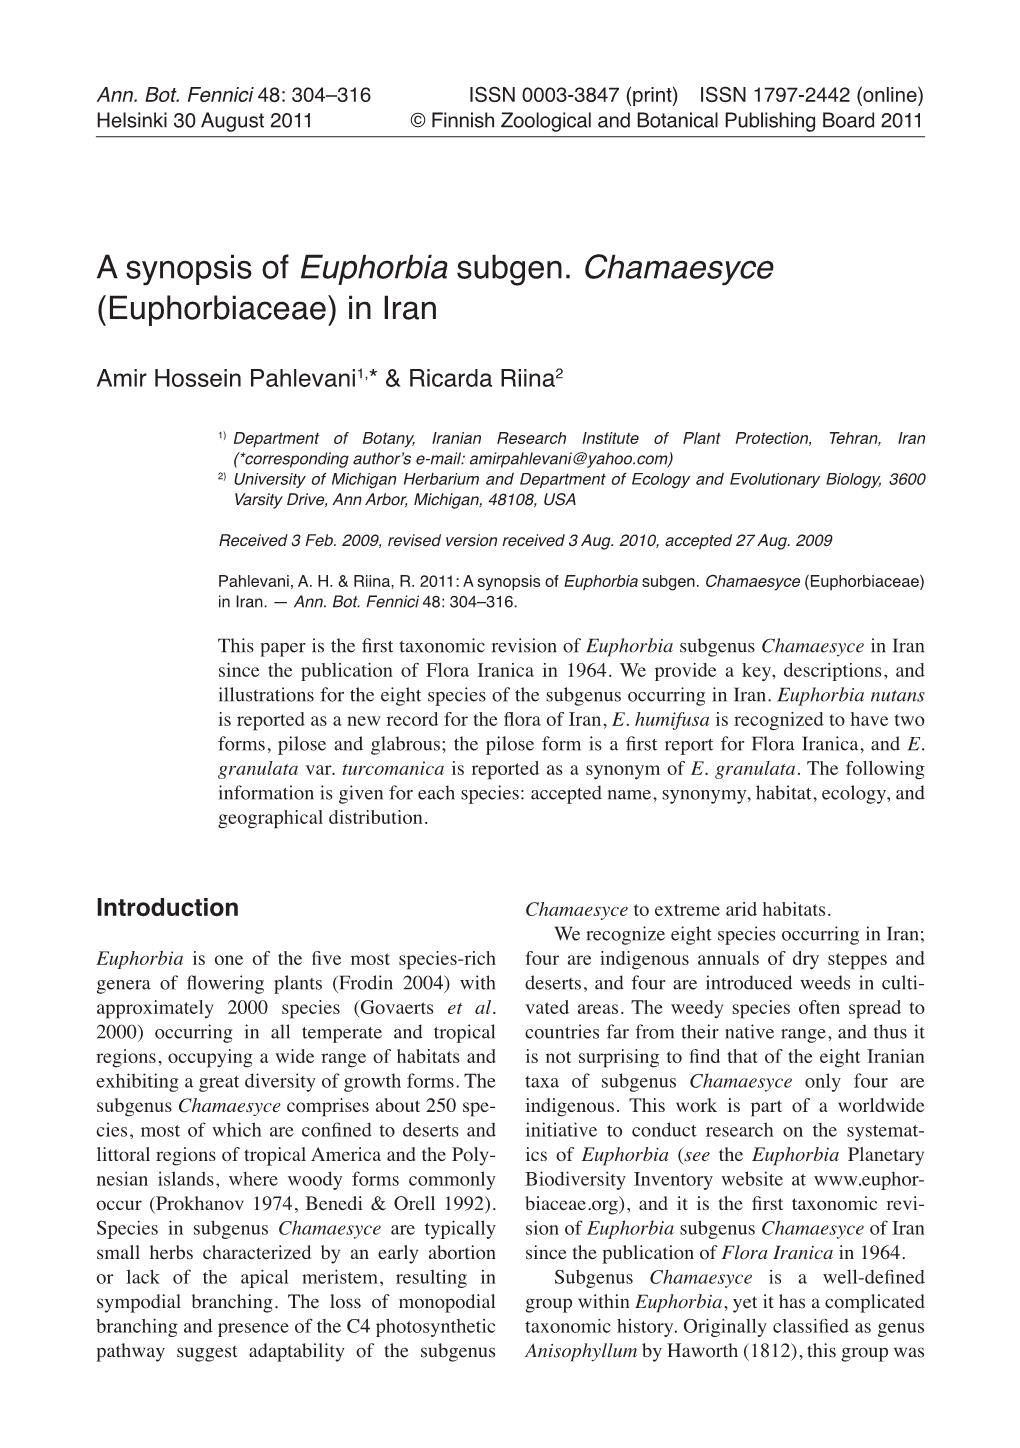 A Synopsis of Euphorbia Subgen. Chamaesyce (Euphorbiaceae) in Iran